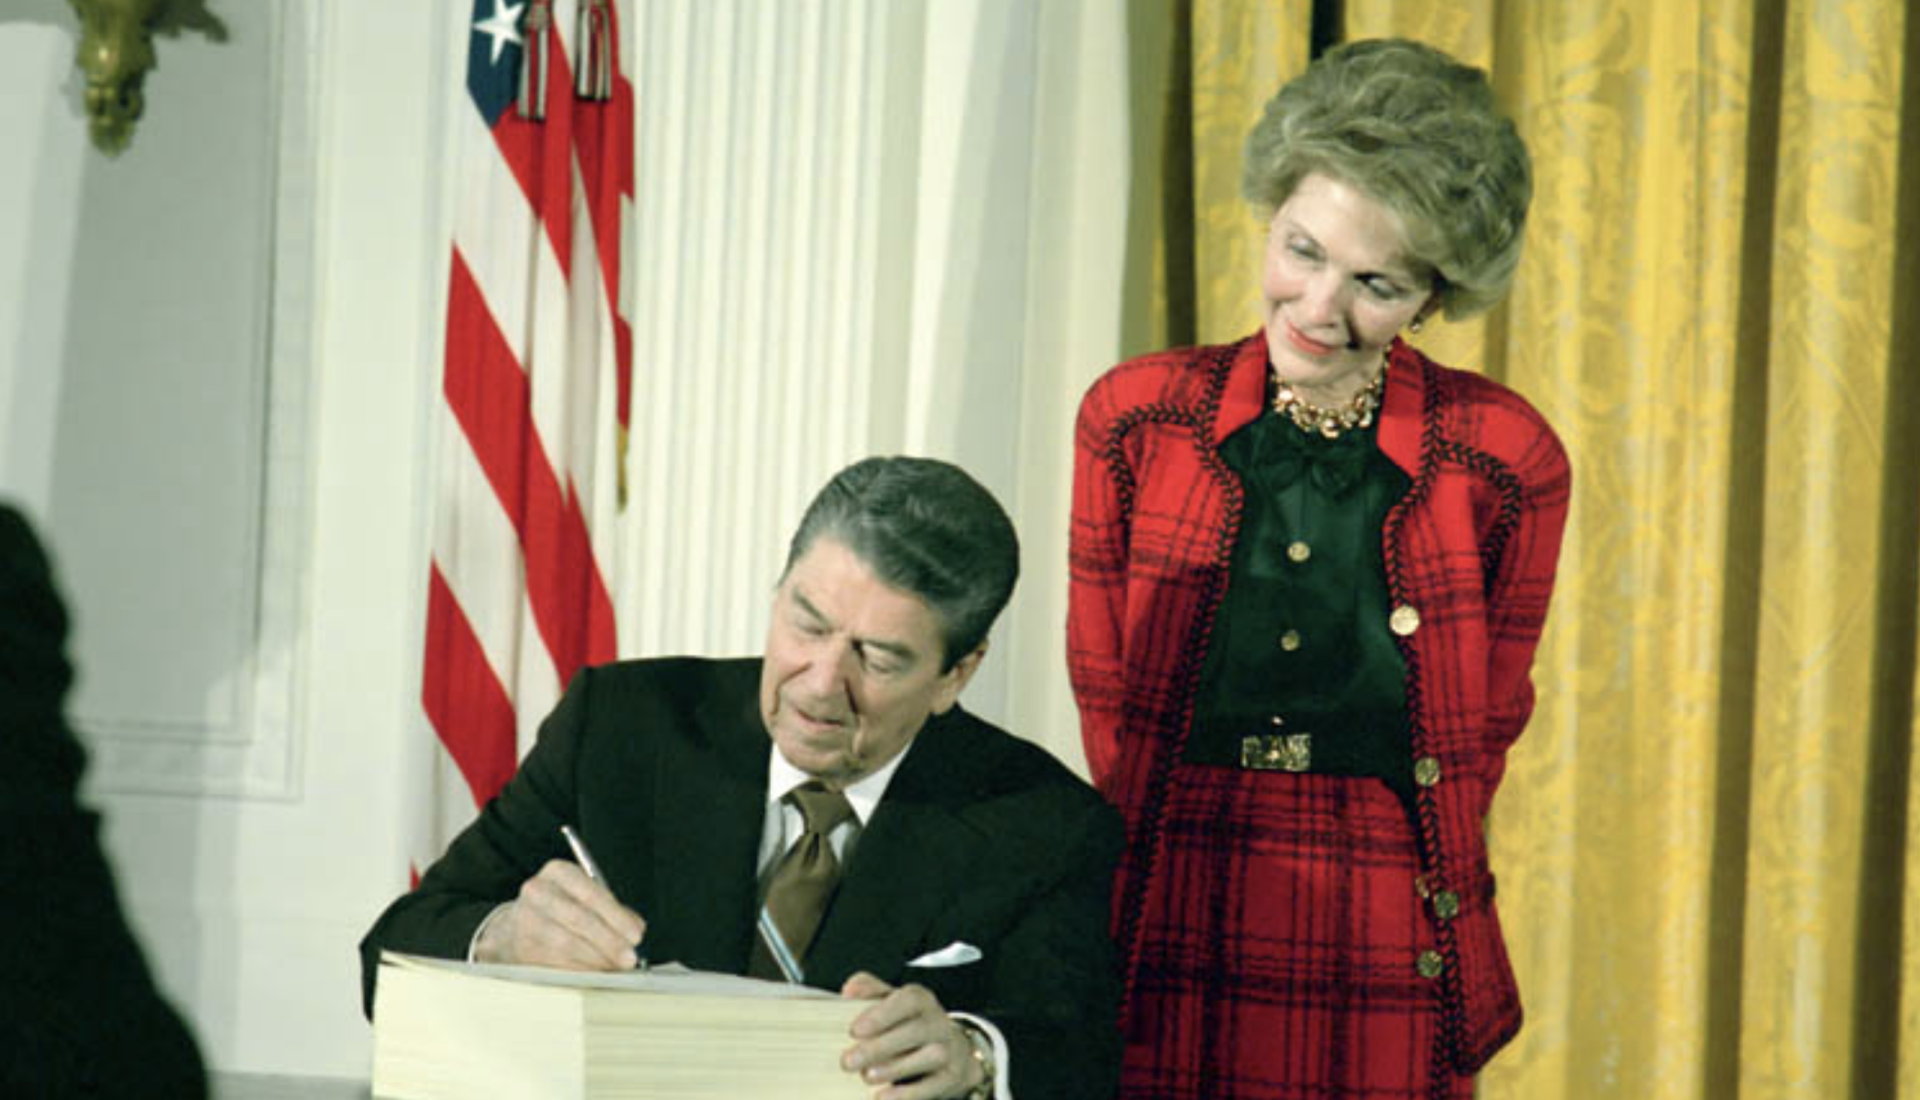 Ronald Reagan signs legislation